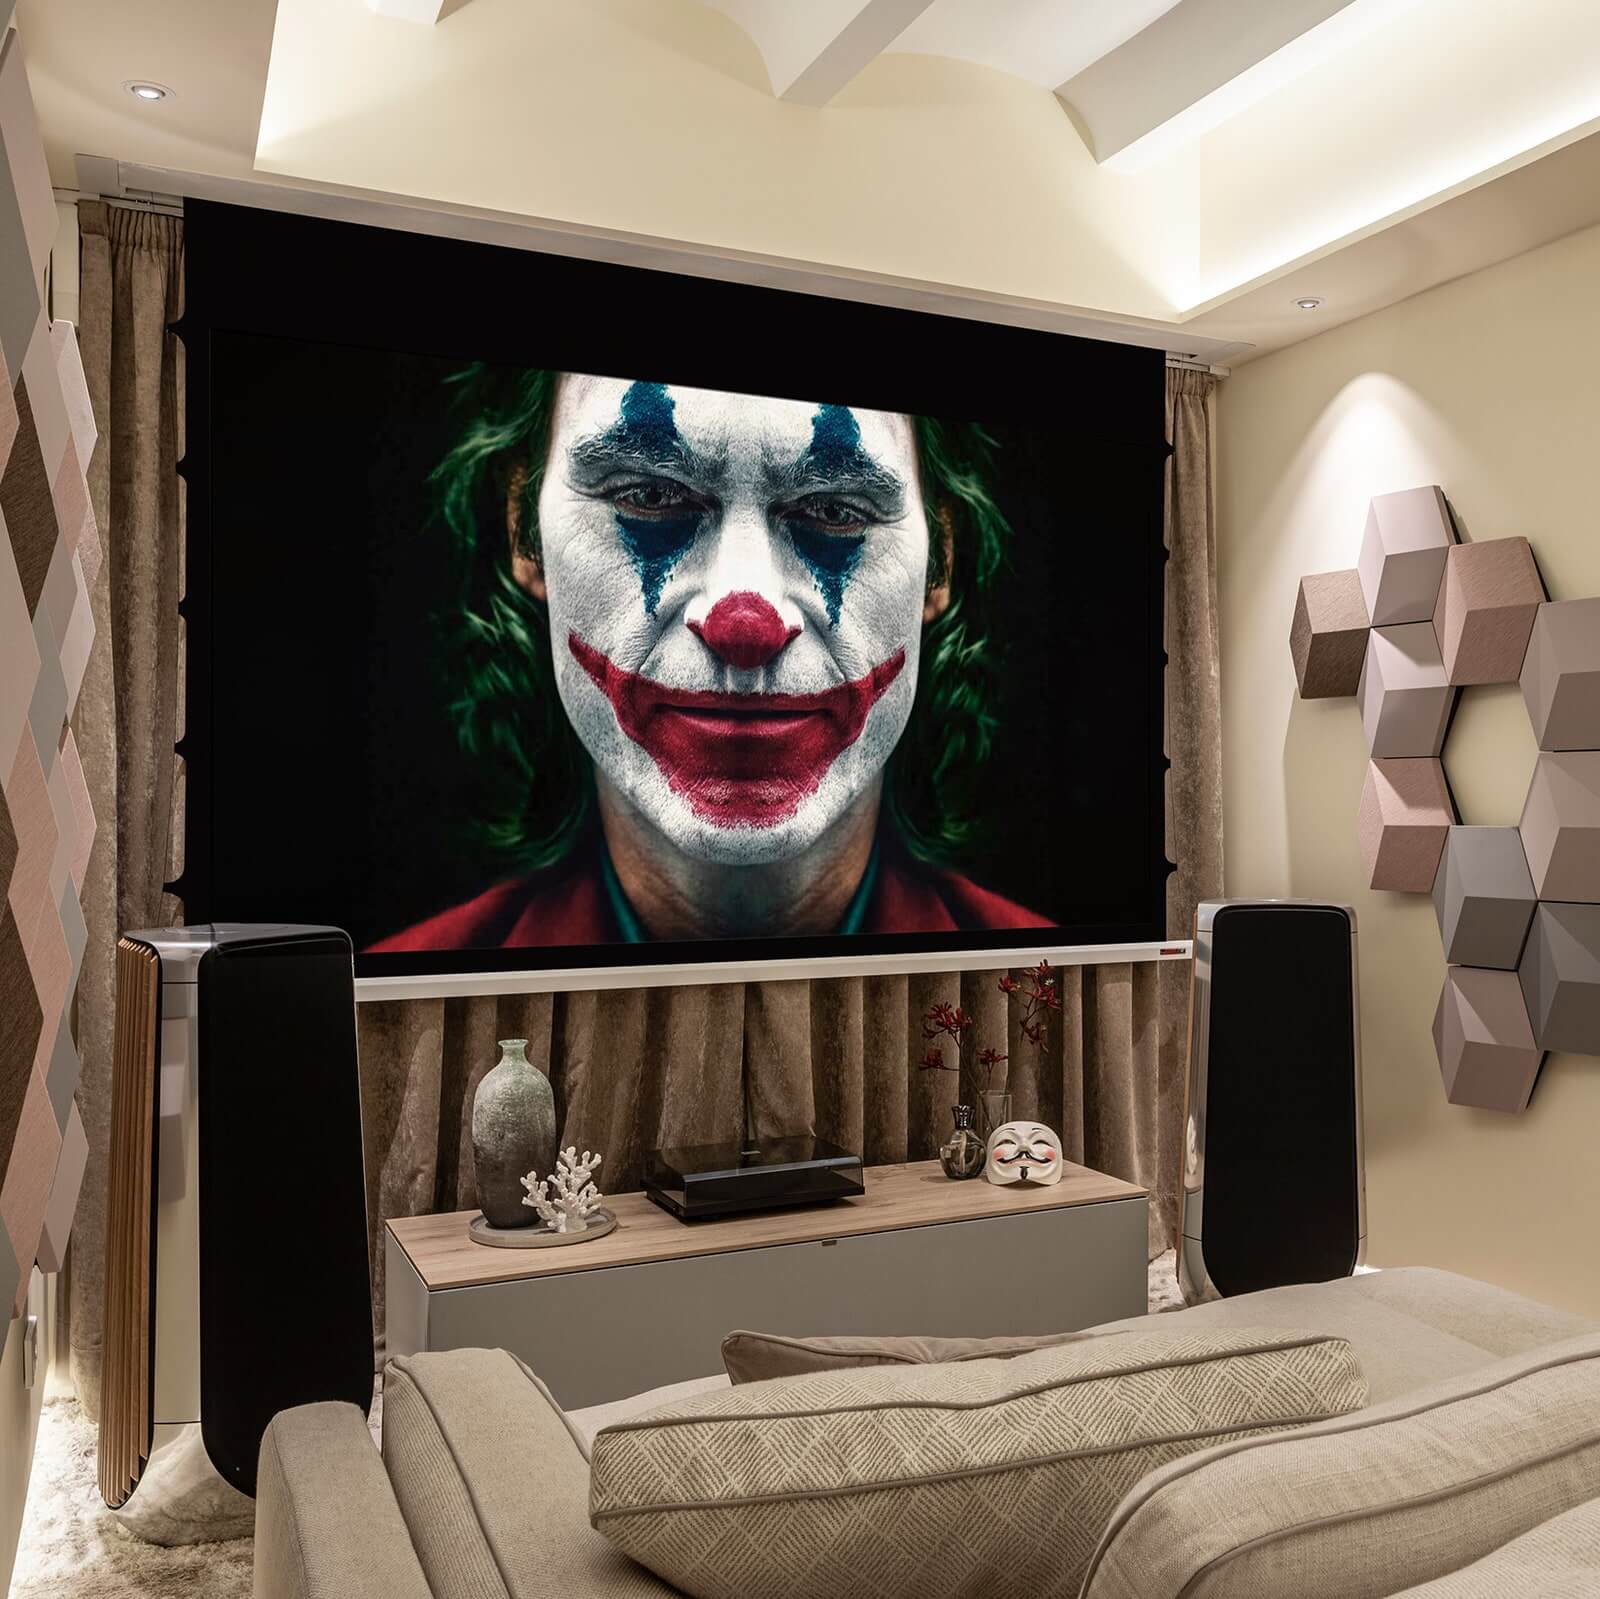 media room playing the latest Joker movie